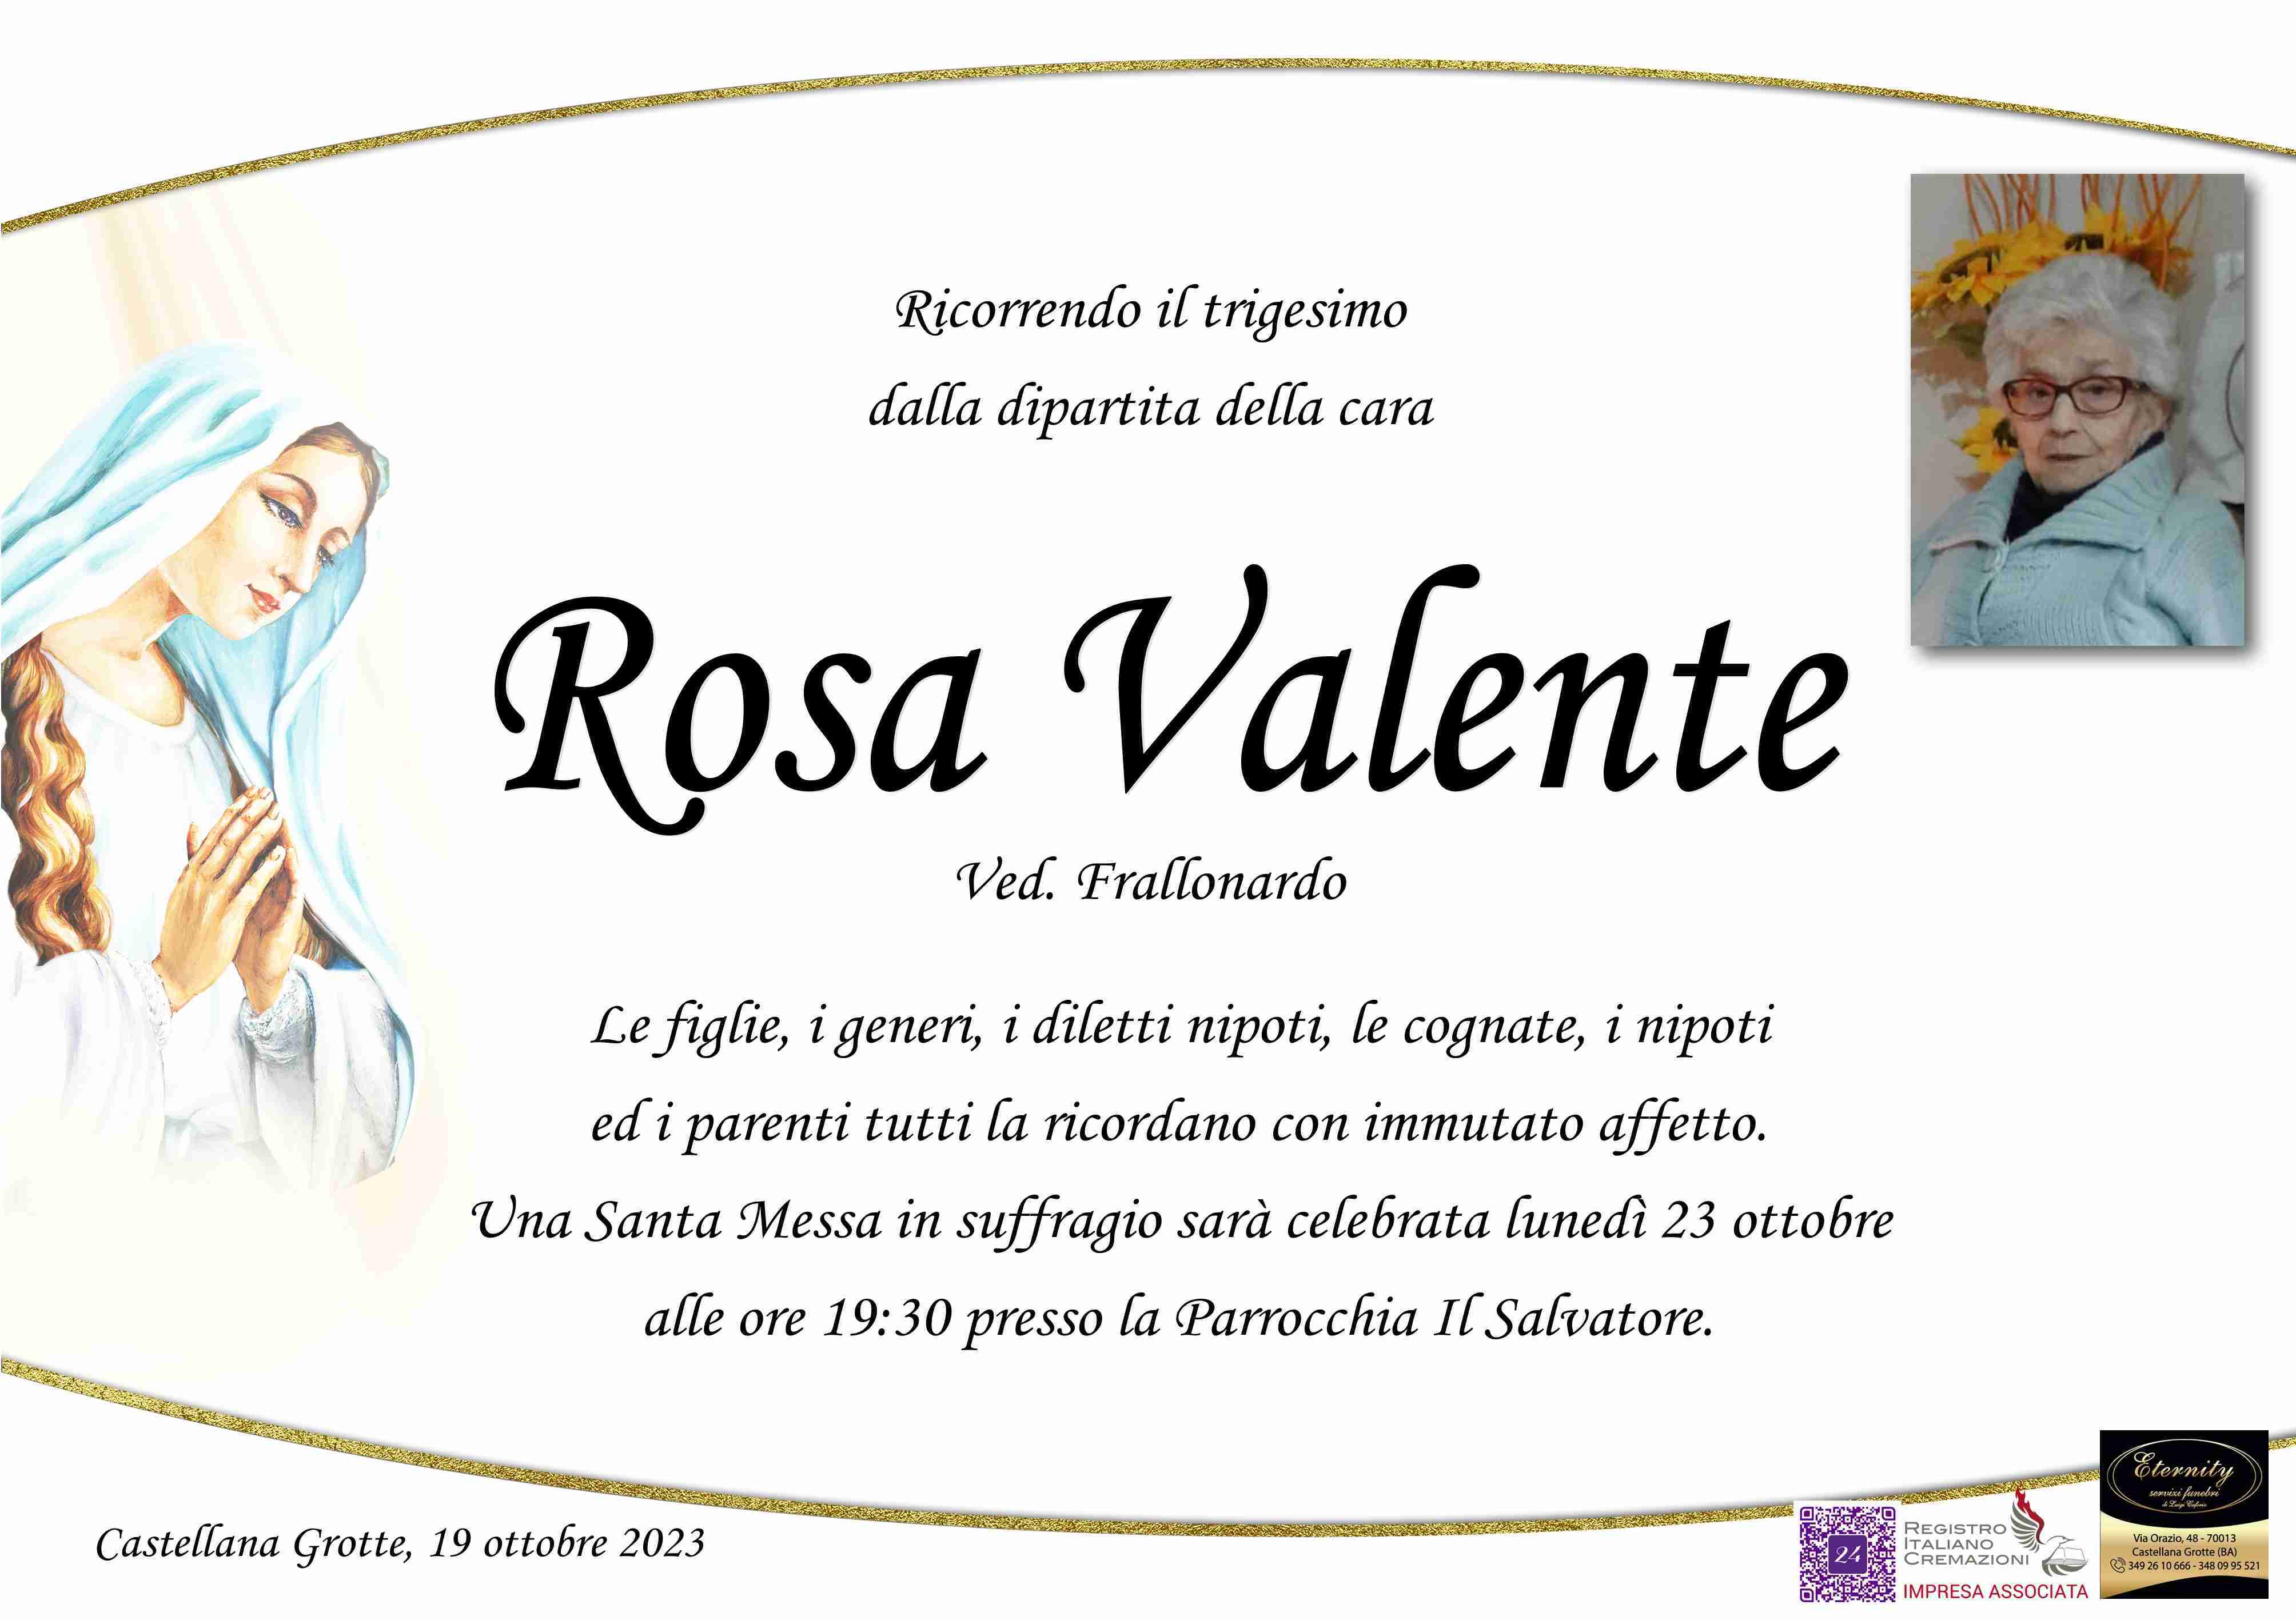 Rosa Valente